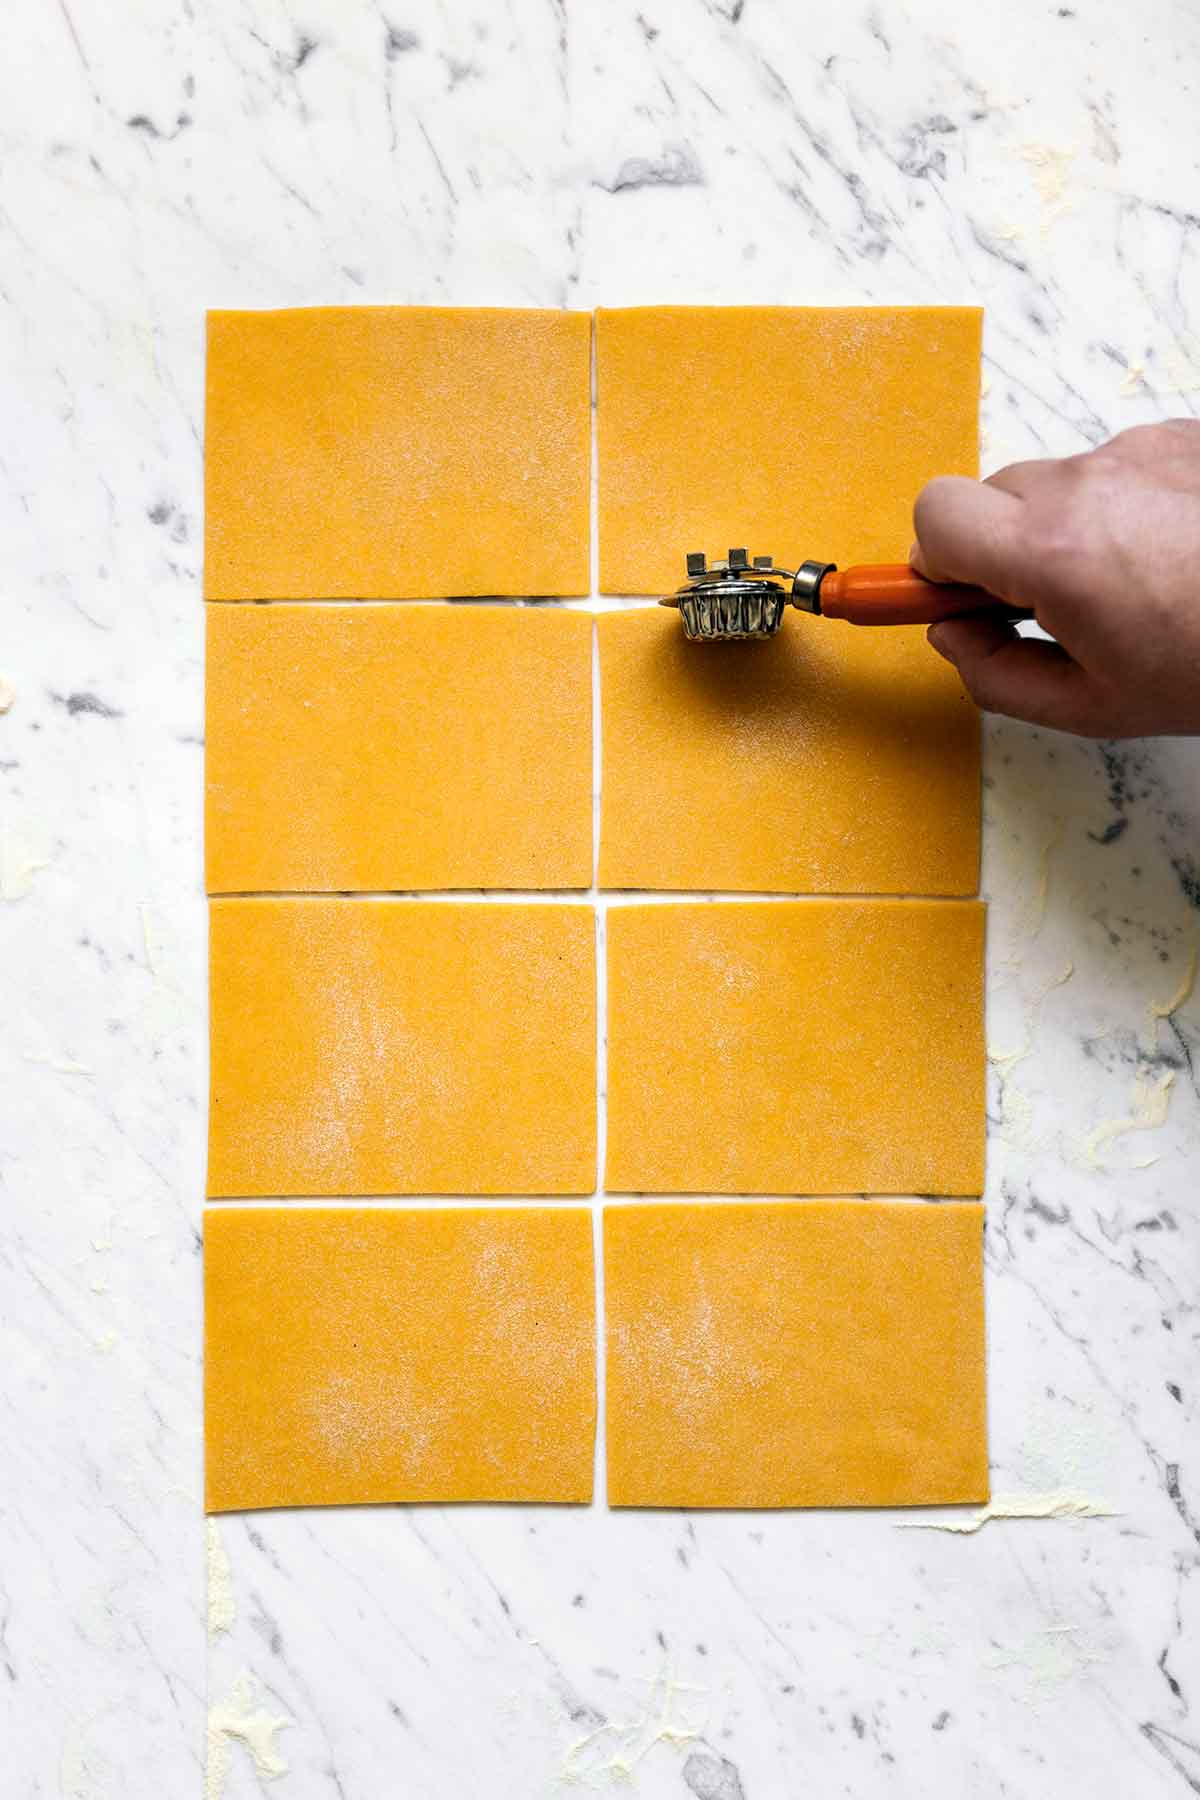 A person cutting a sheet of pumpkin pasta dough into rectangles.